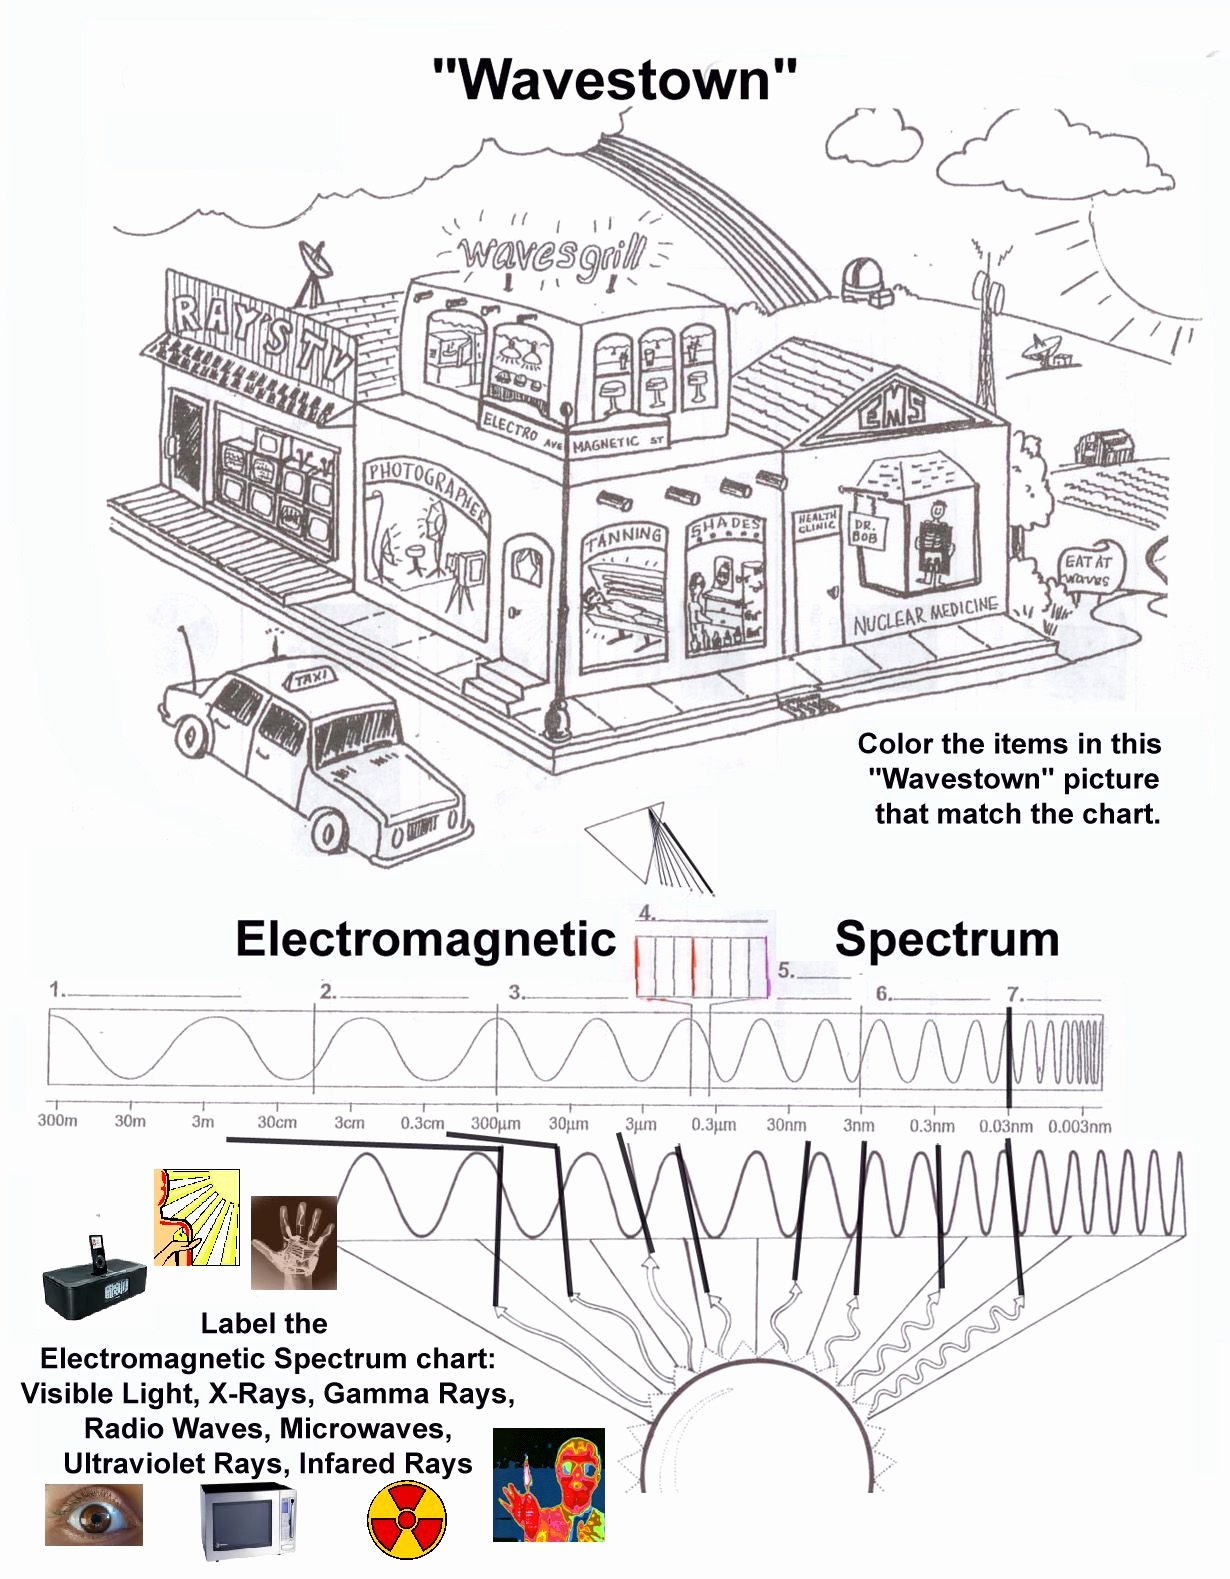 Electromagnetic Spectrum Worksheet Answers Inspirational Worksheet Waves and Electromagnetic Spectrum Worksheet